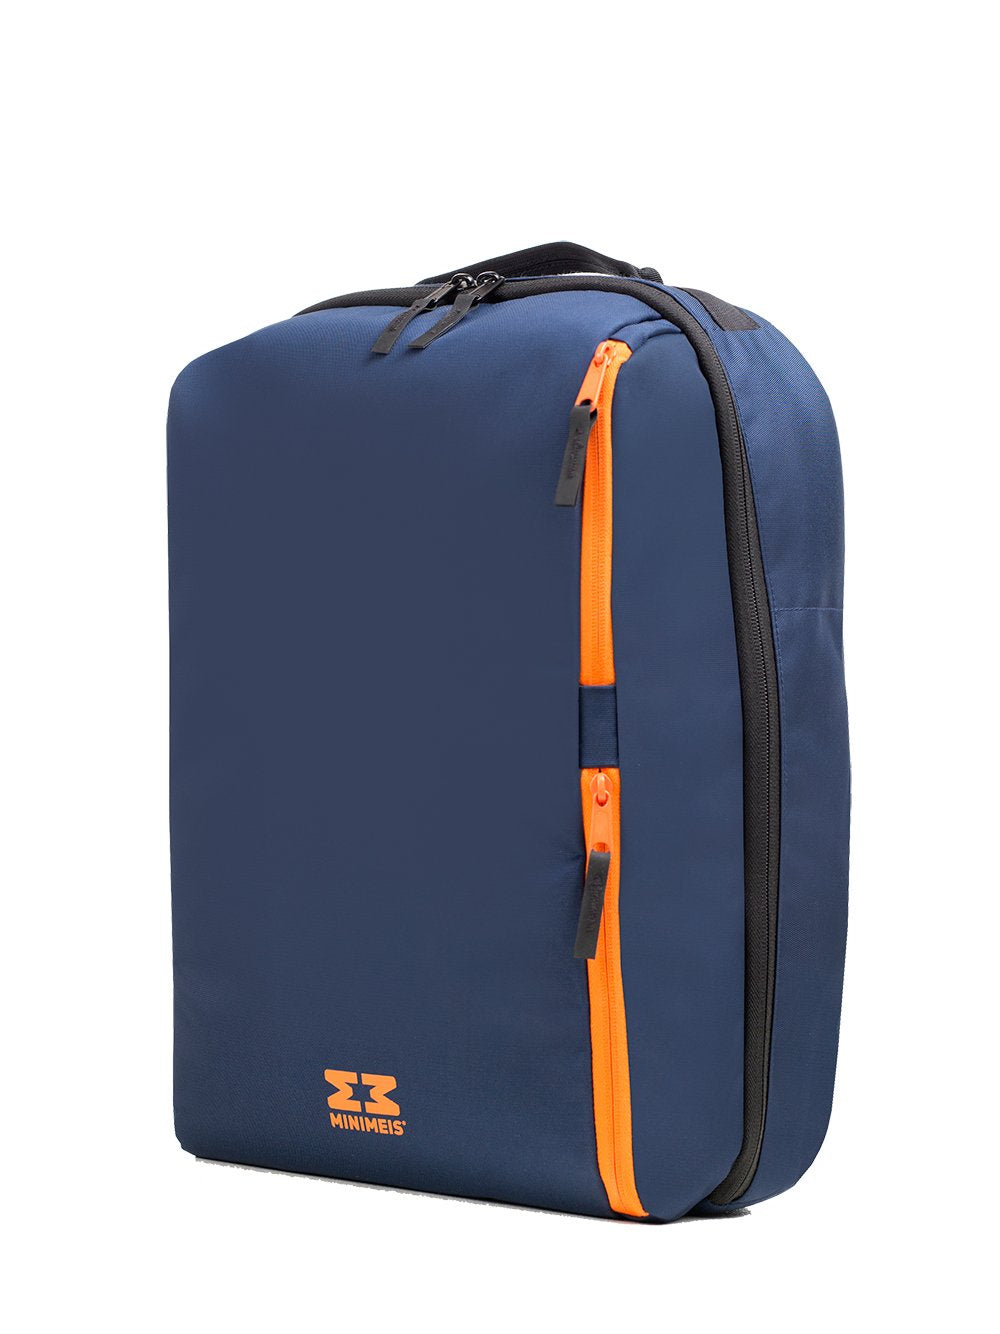 Minimeis - backpack - Navy